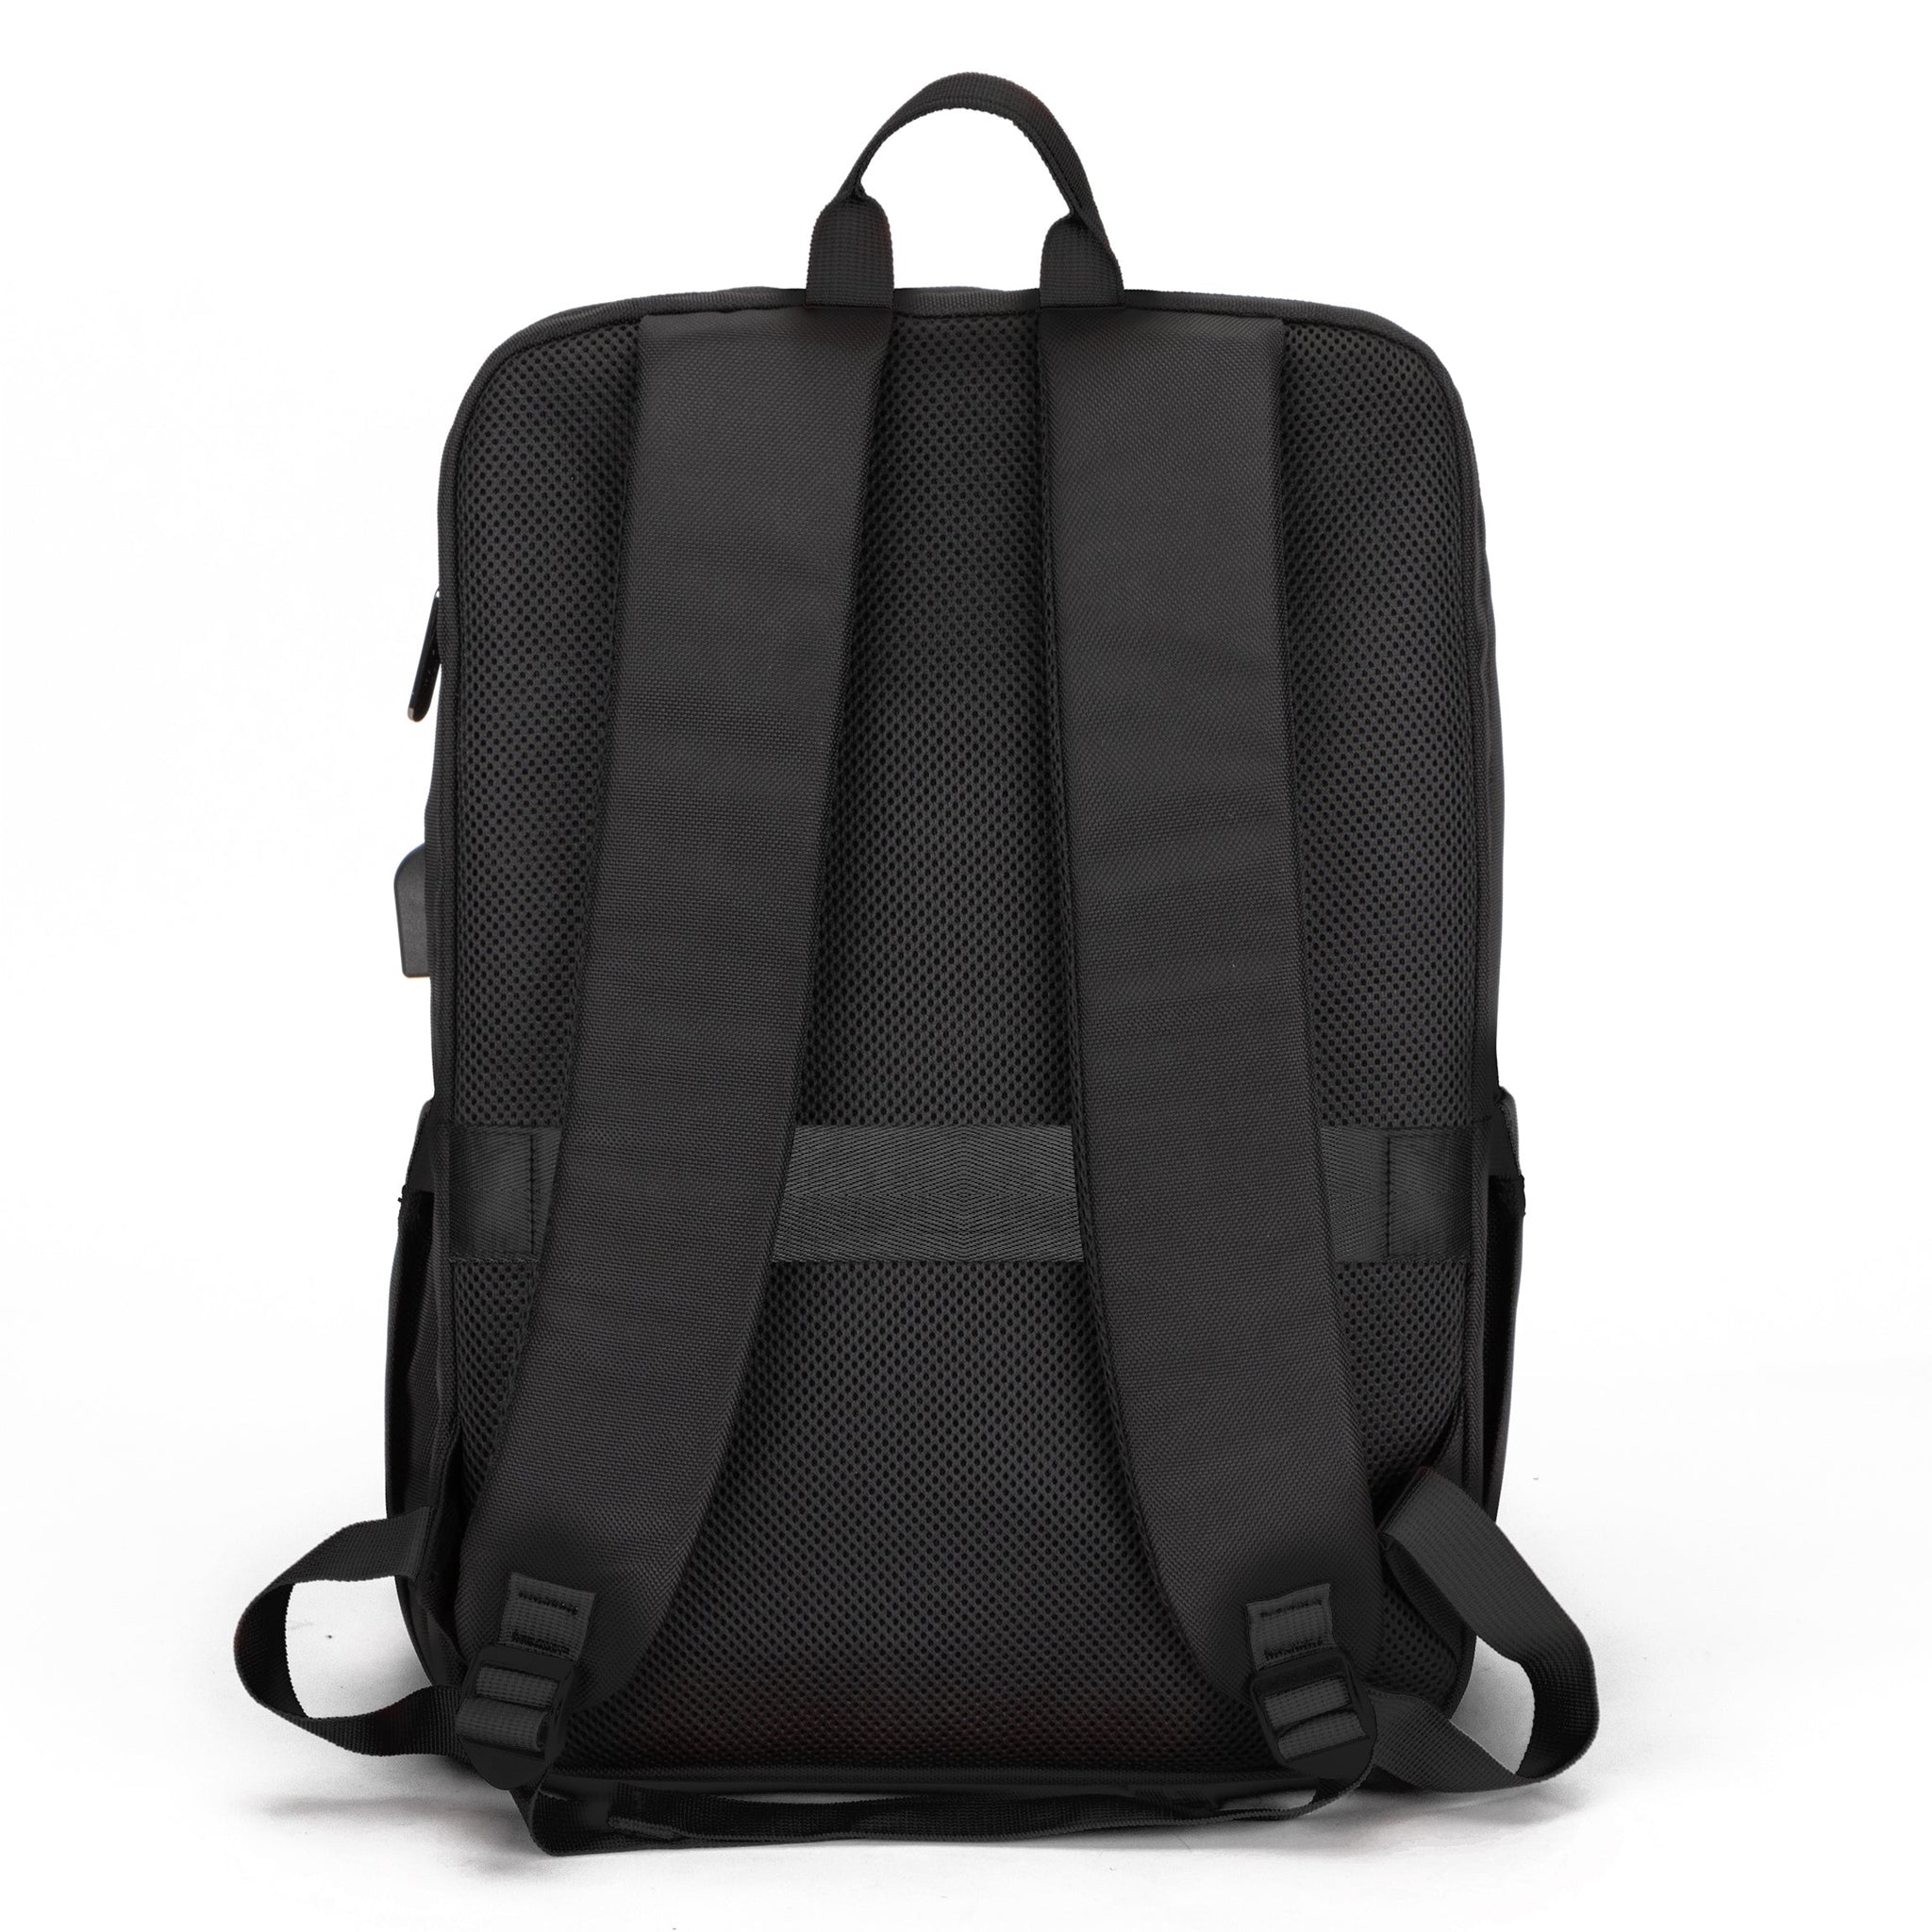 IZOD Gina Slim 15.6" Laptop Backpack with USB Charging Port